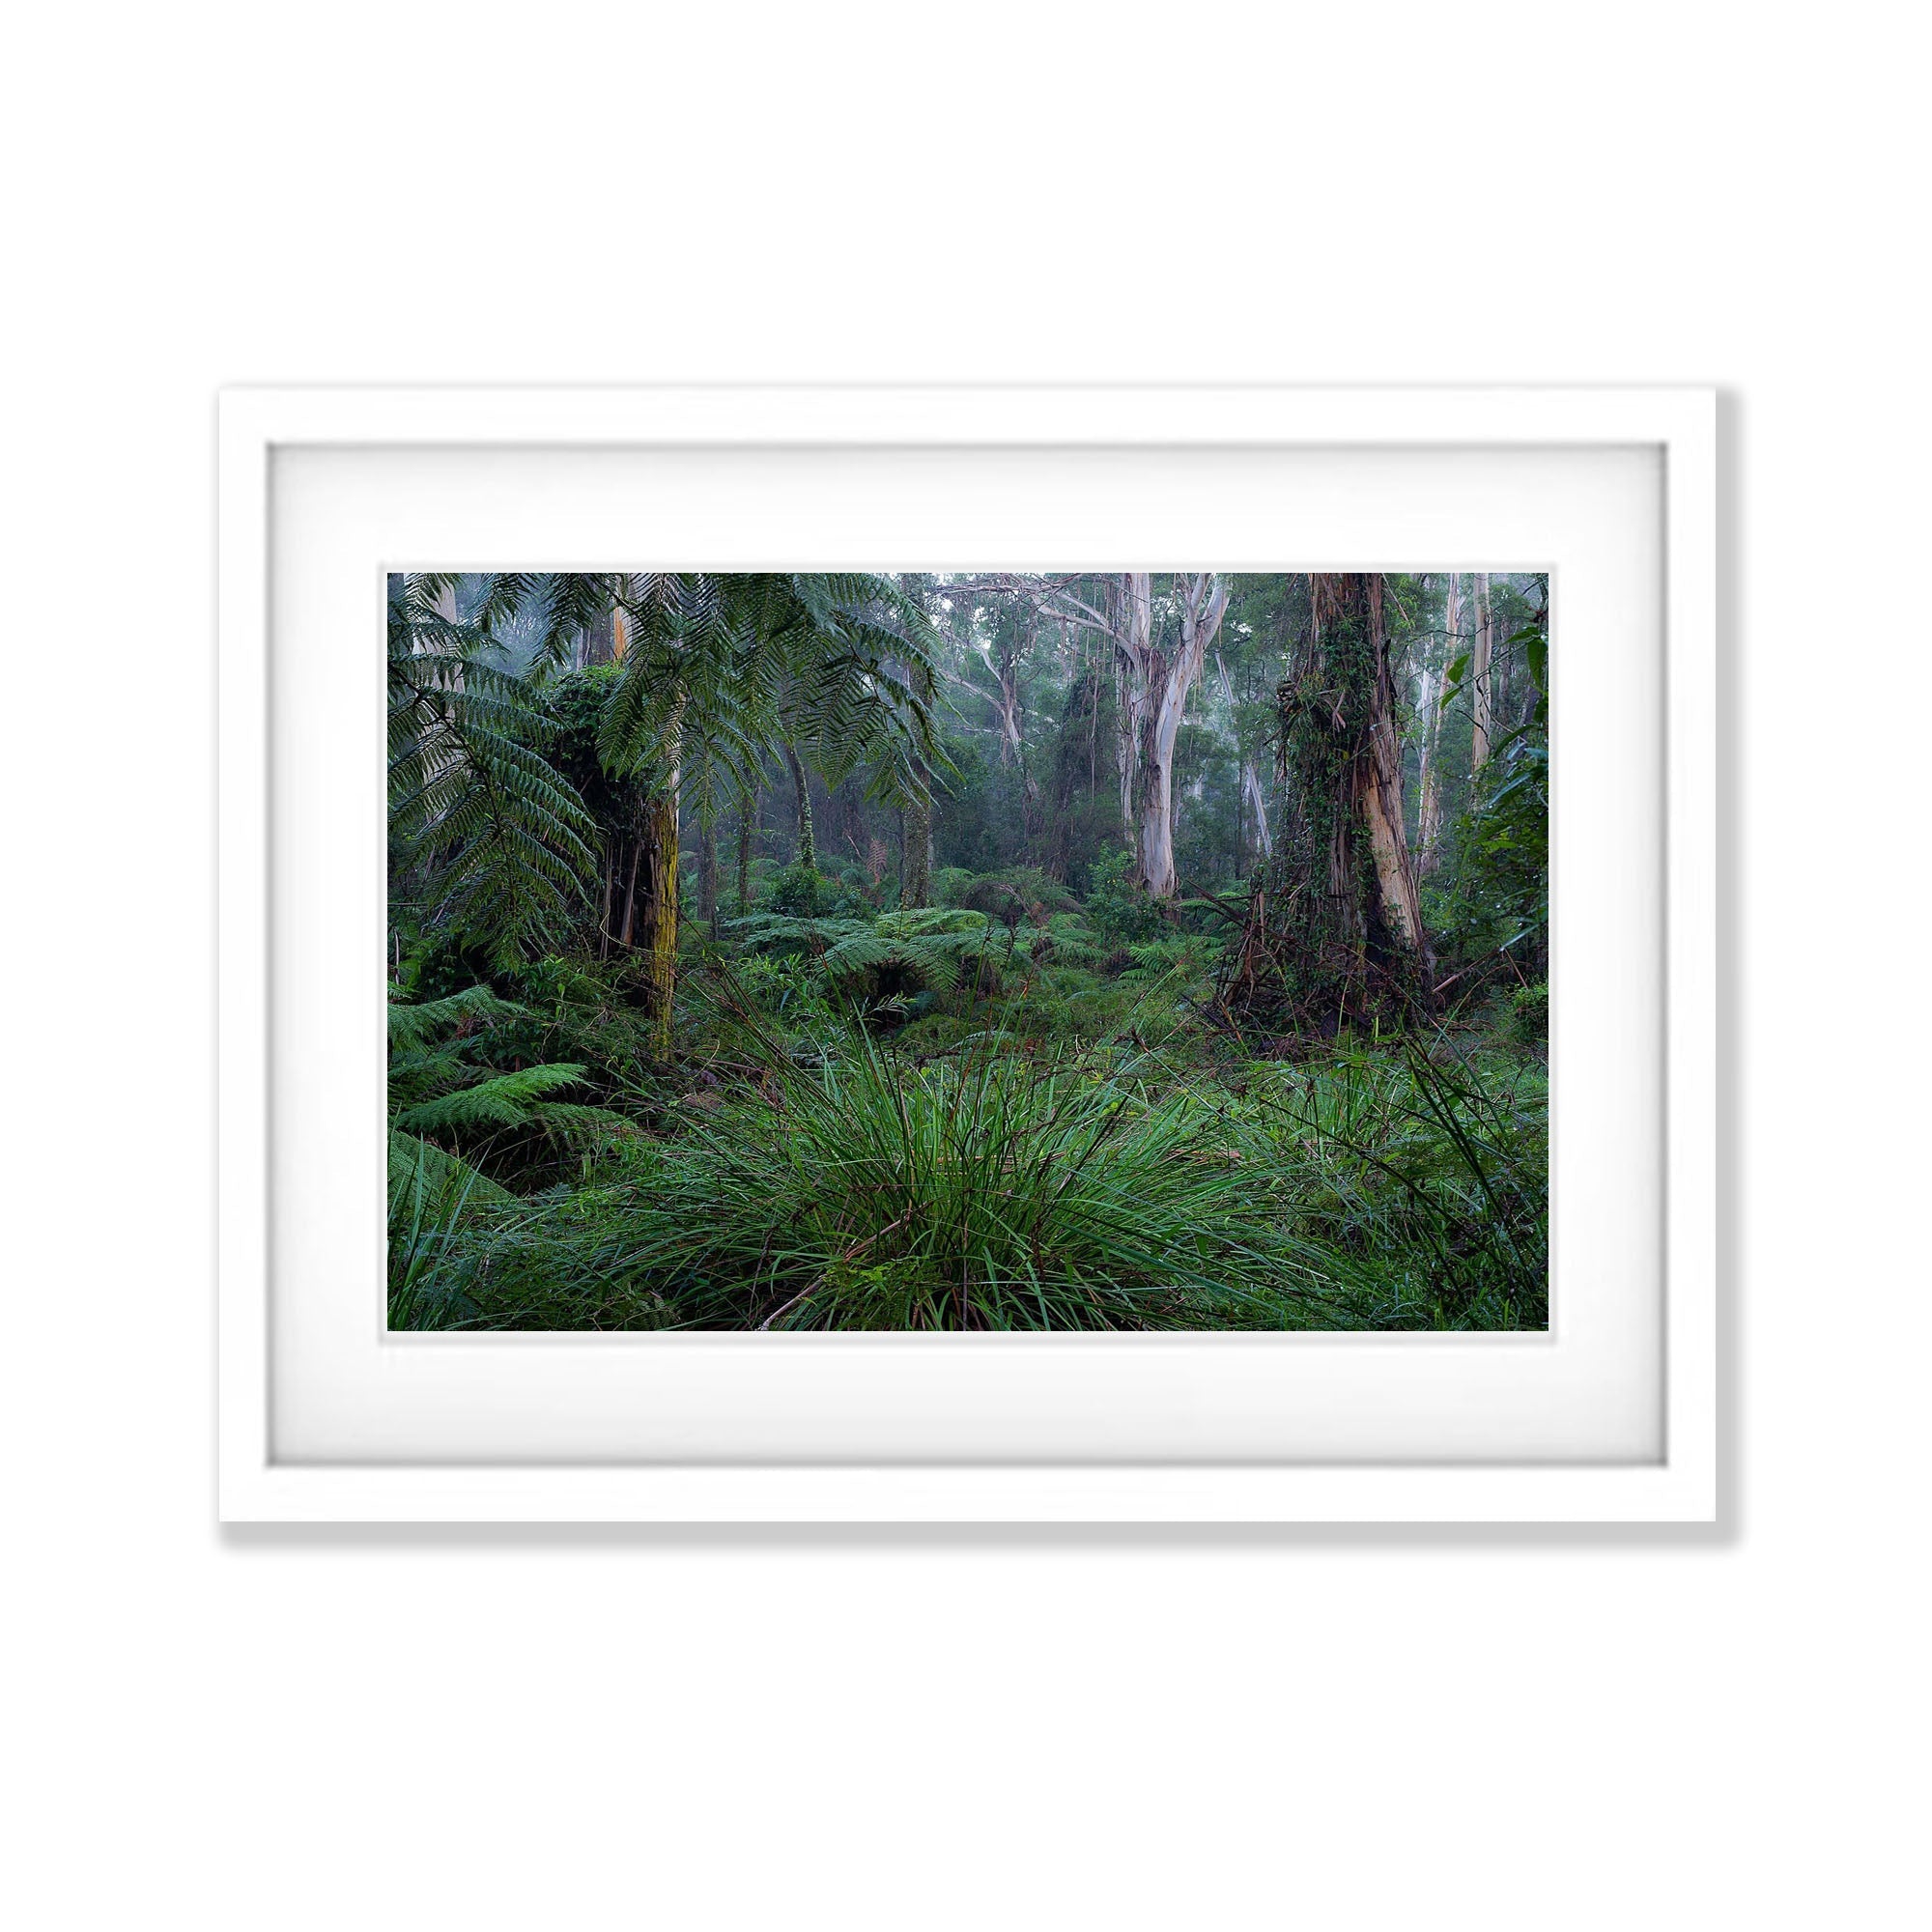 Fern Gully Rainforest, Mornington Peninsula, VIC